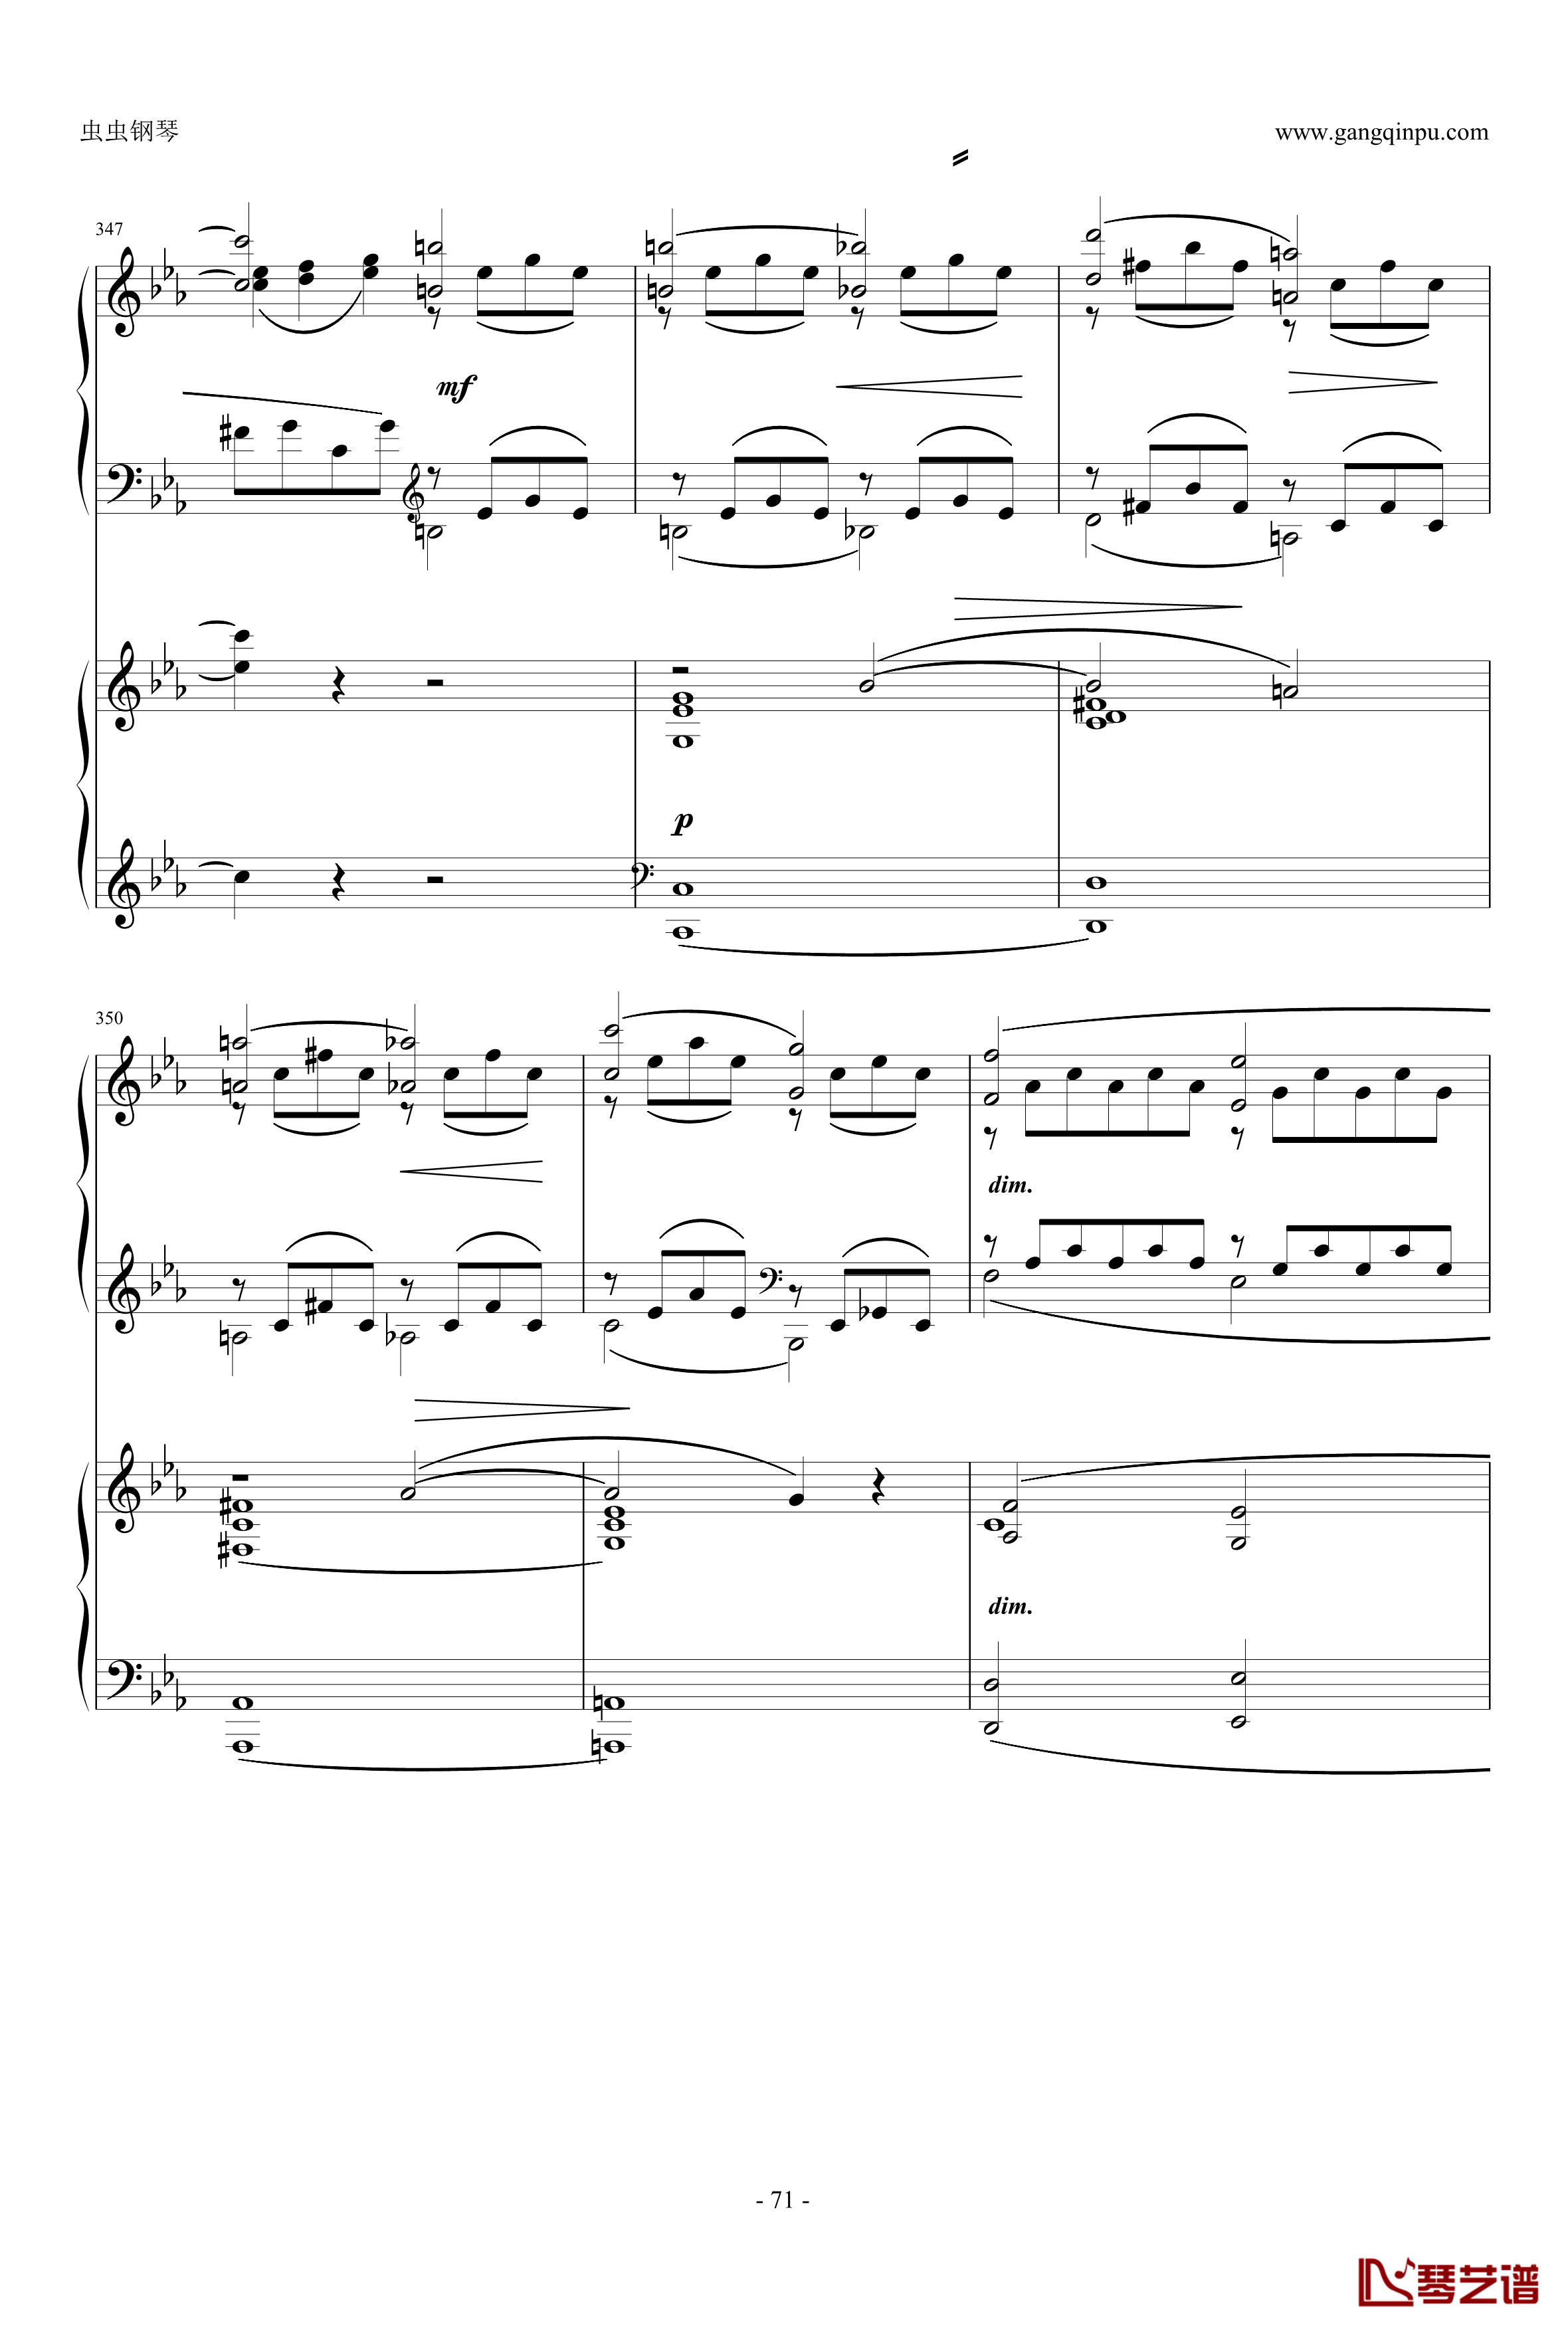 c小调第2钢琴协奏曲钢琴谱-拉赫马尼若夫71